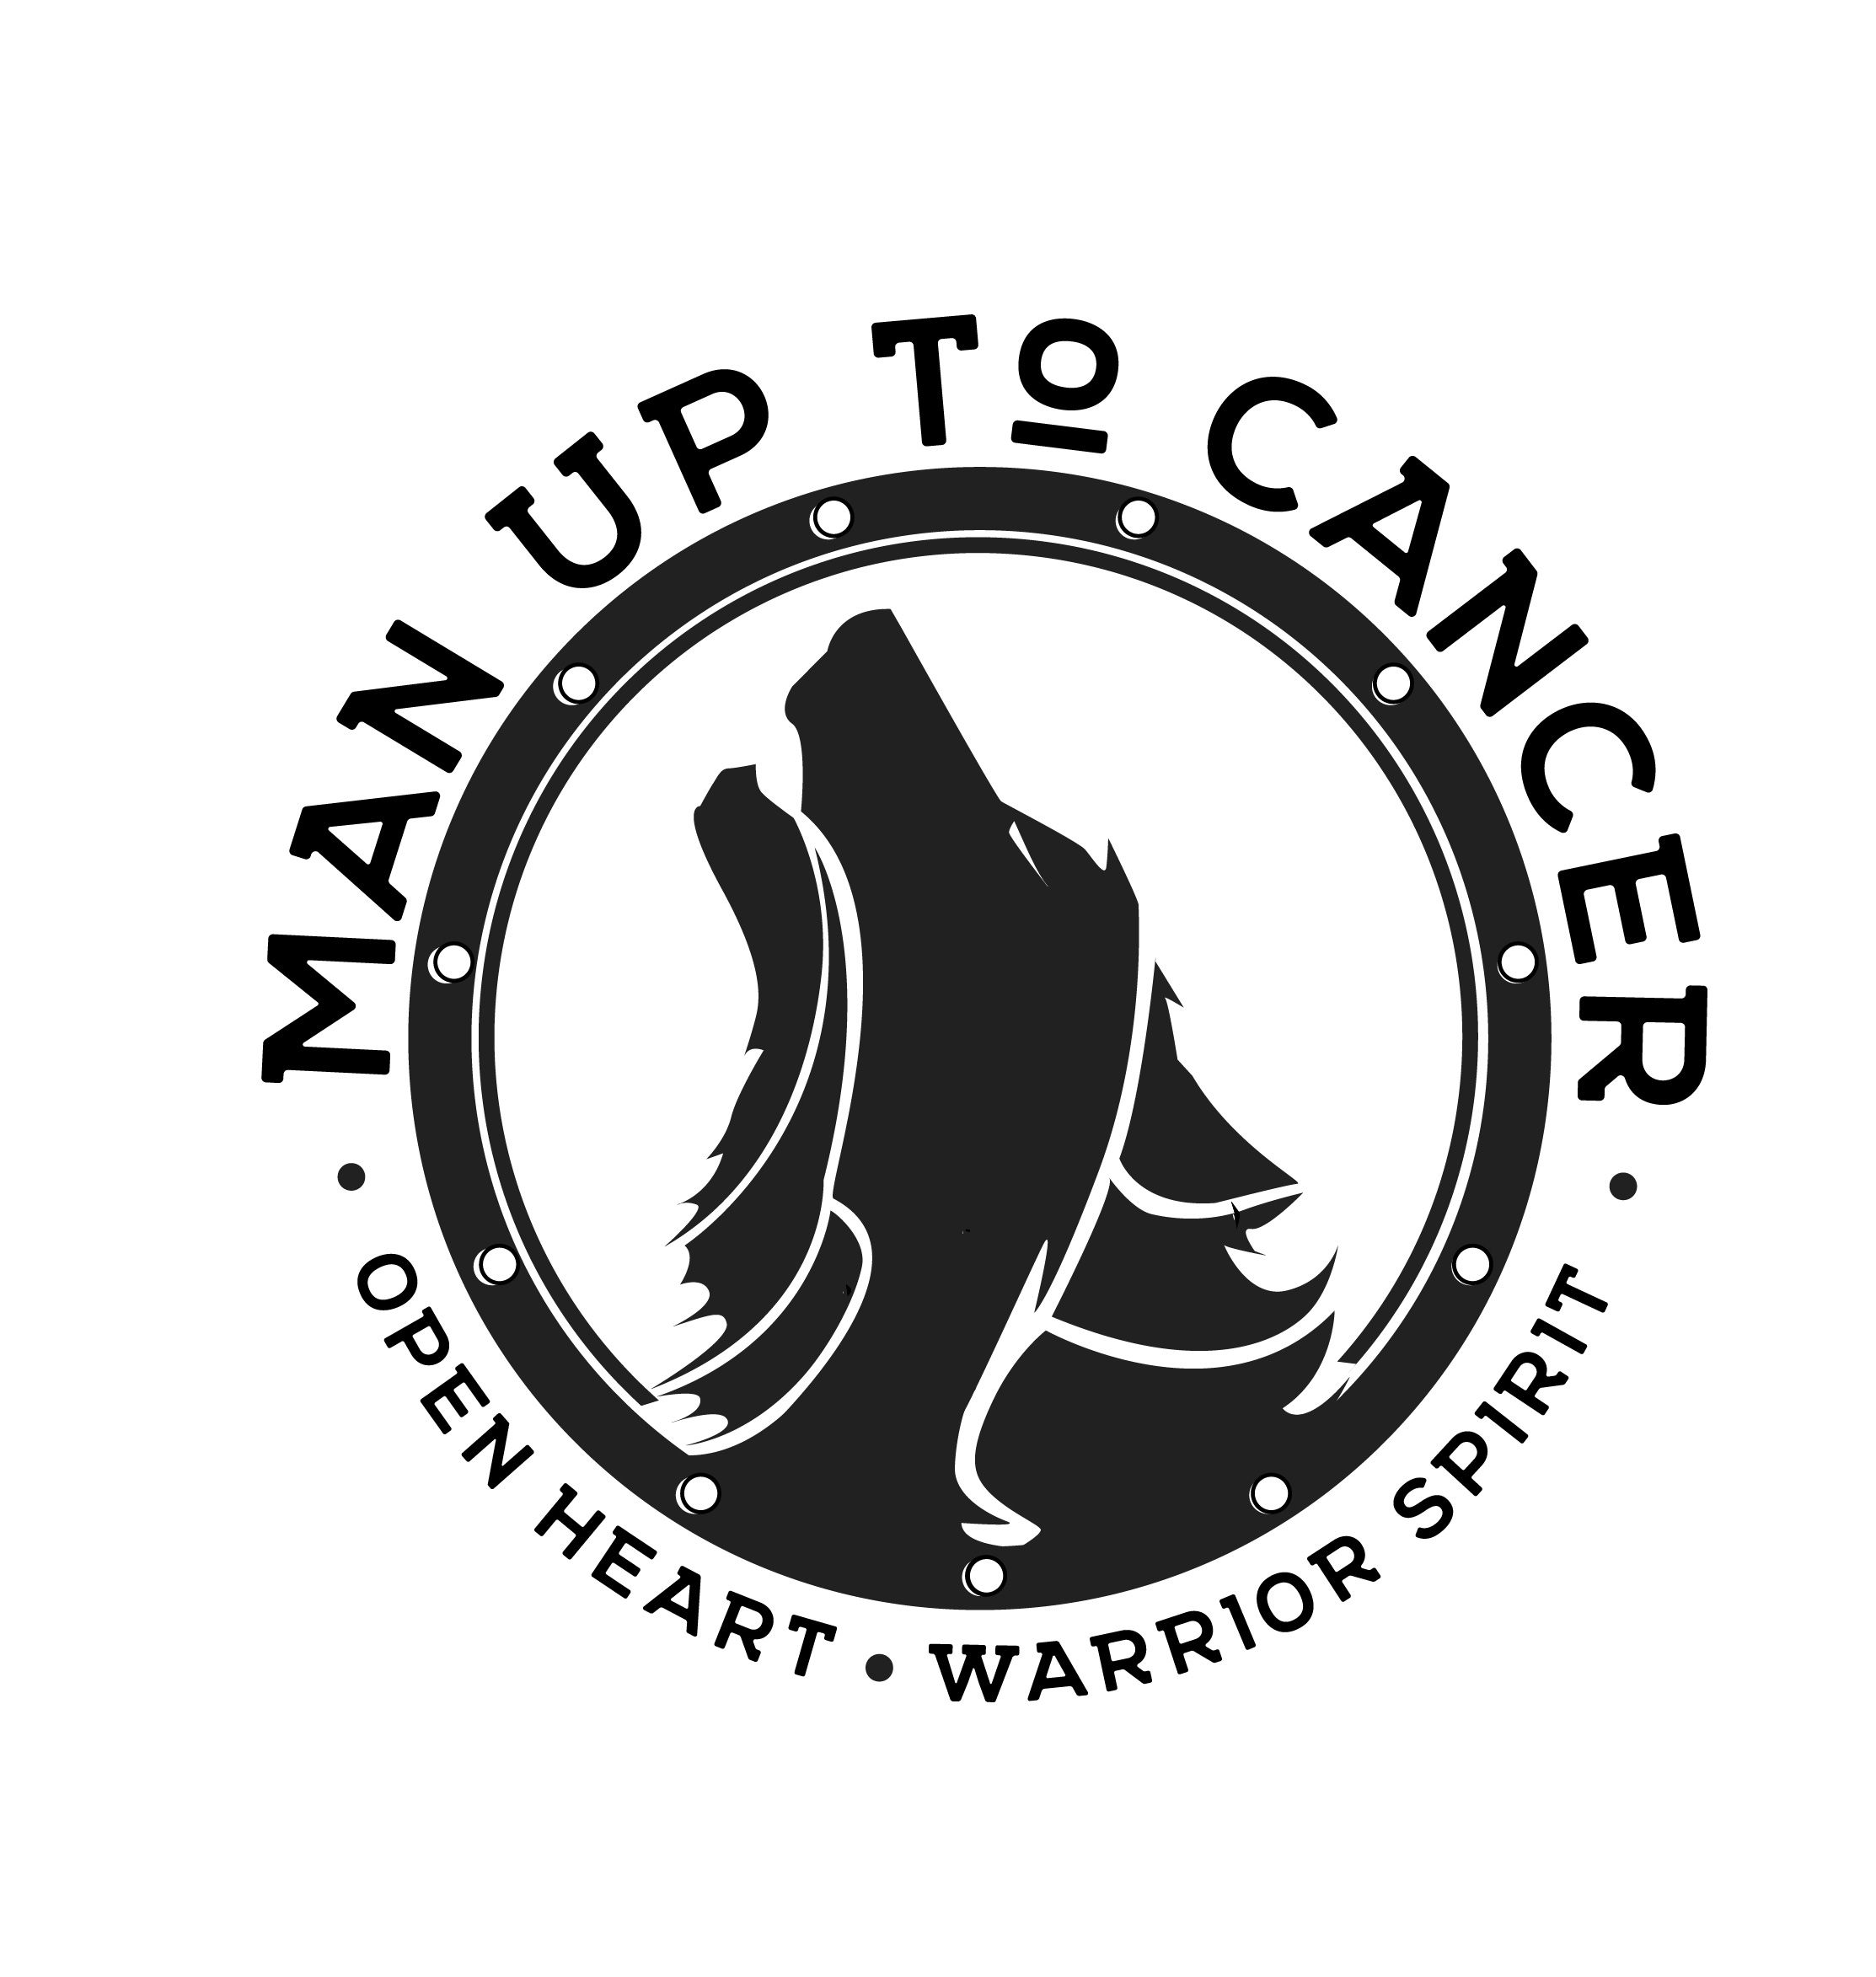 Man Up to Cancer logo